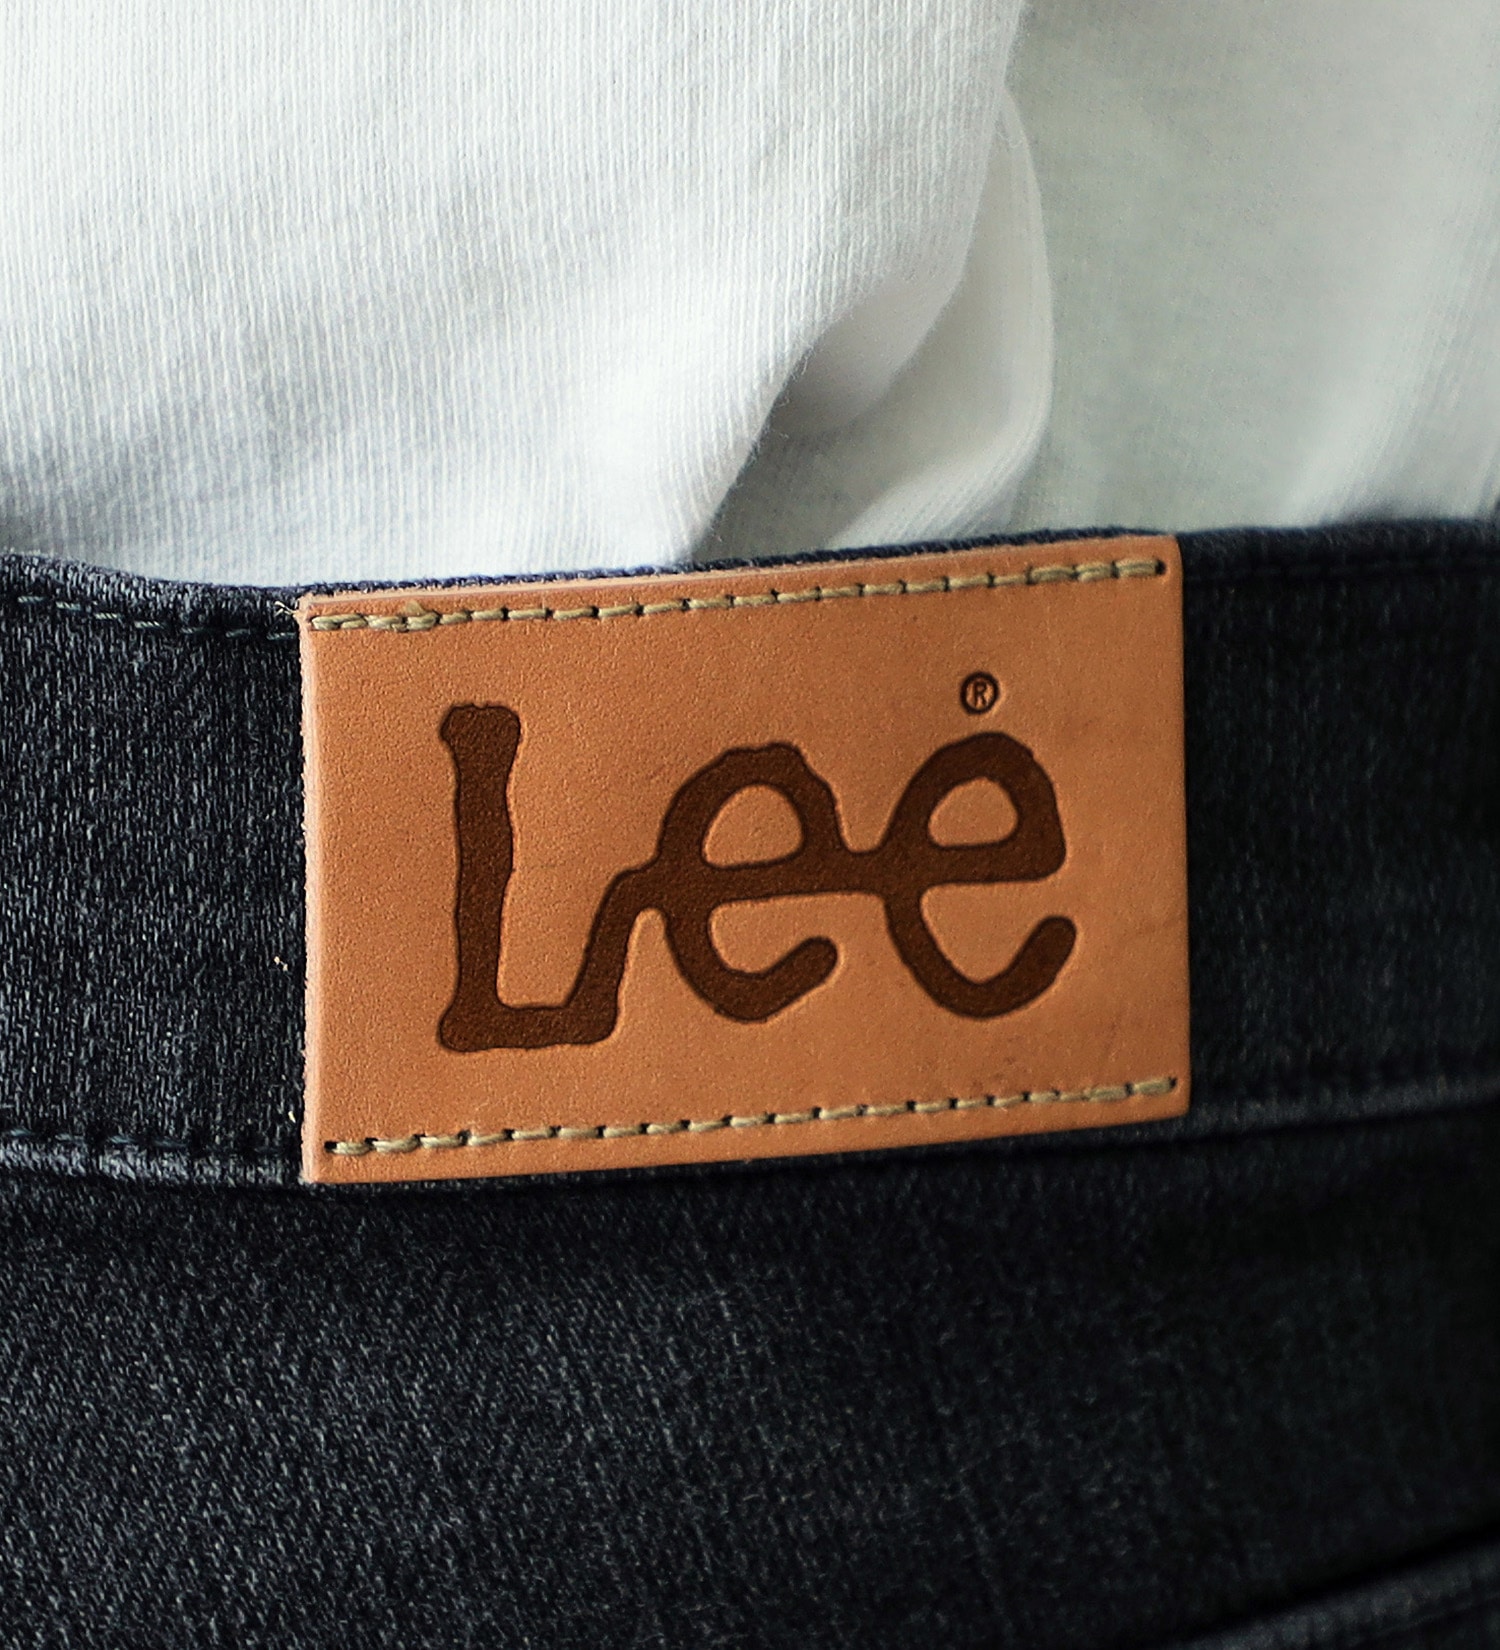 Lee(リー)の【超快適ストレッチ】すっきり細身スキニーパンツ|パンツ/デニムパンツ/メンズ|ブラックデニム2